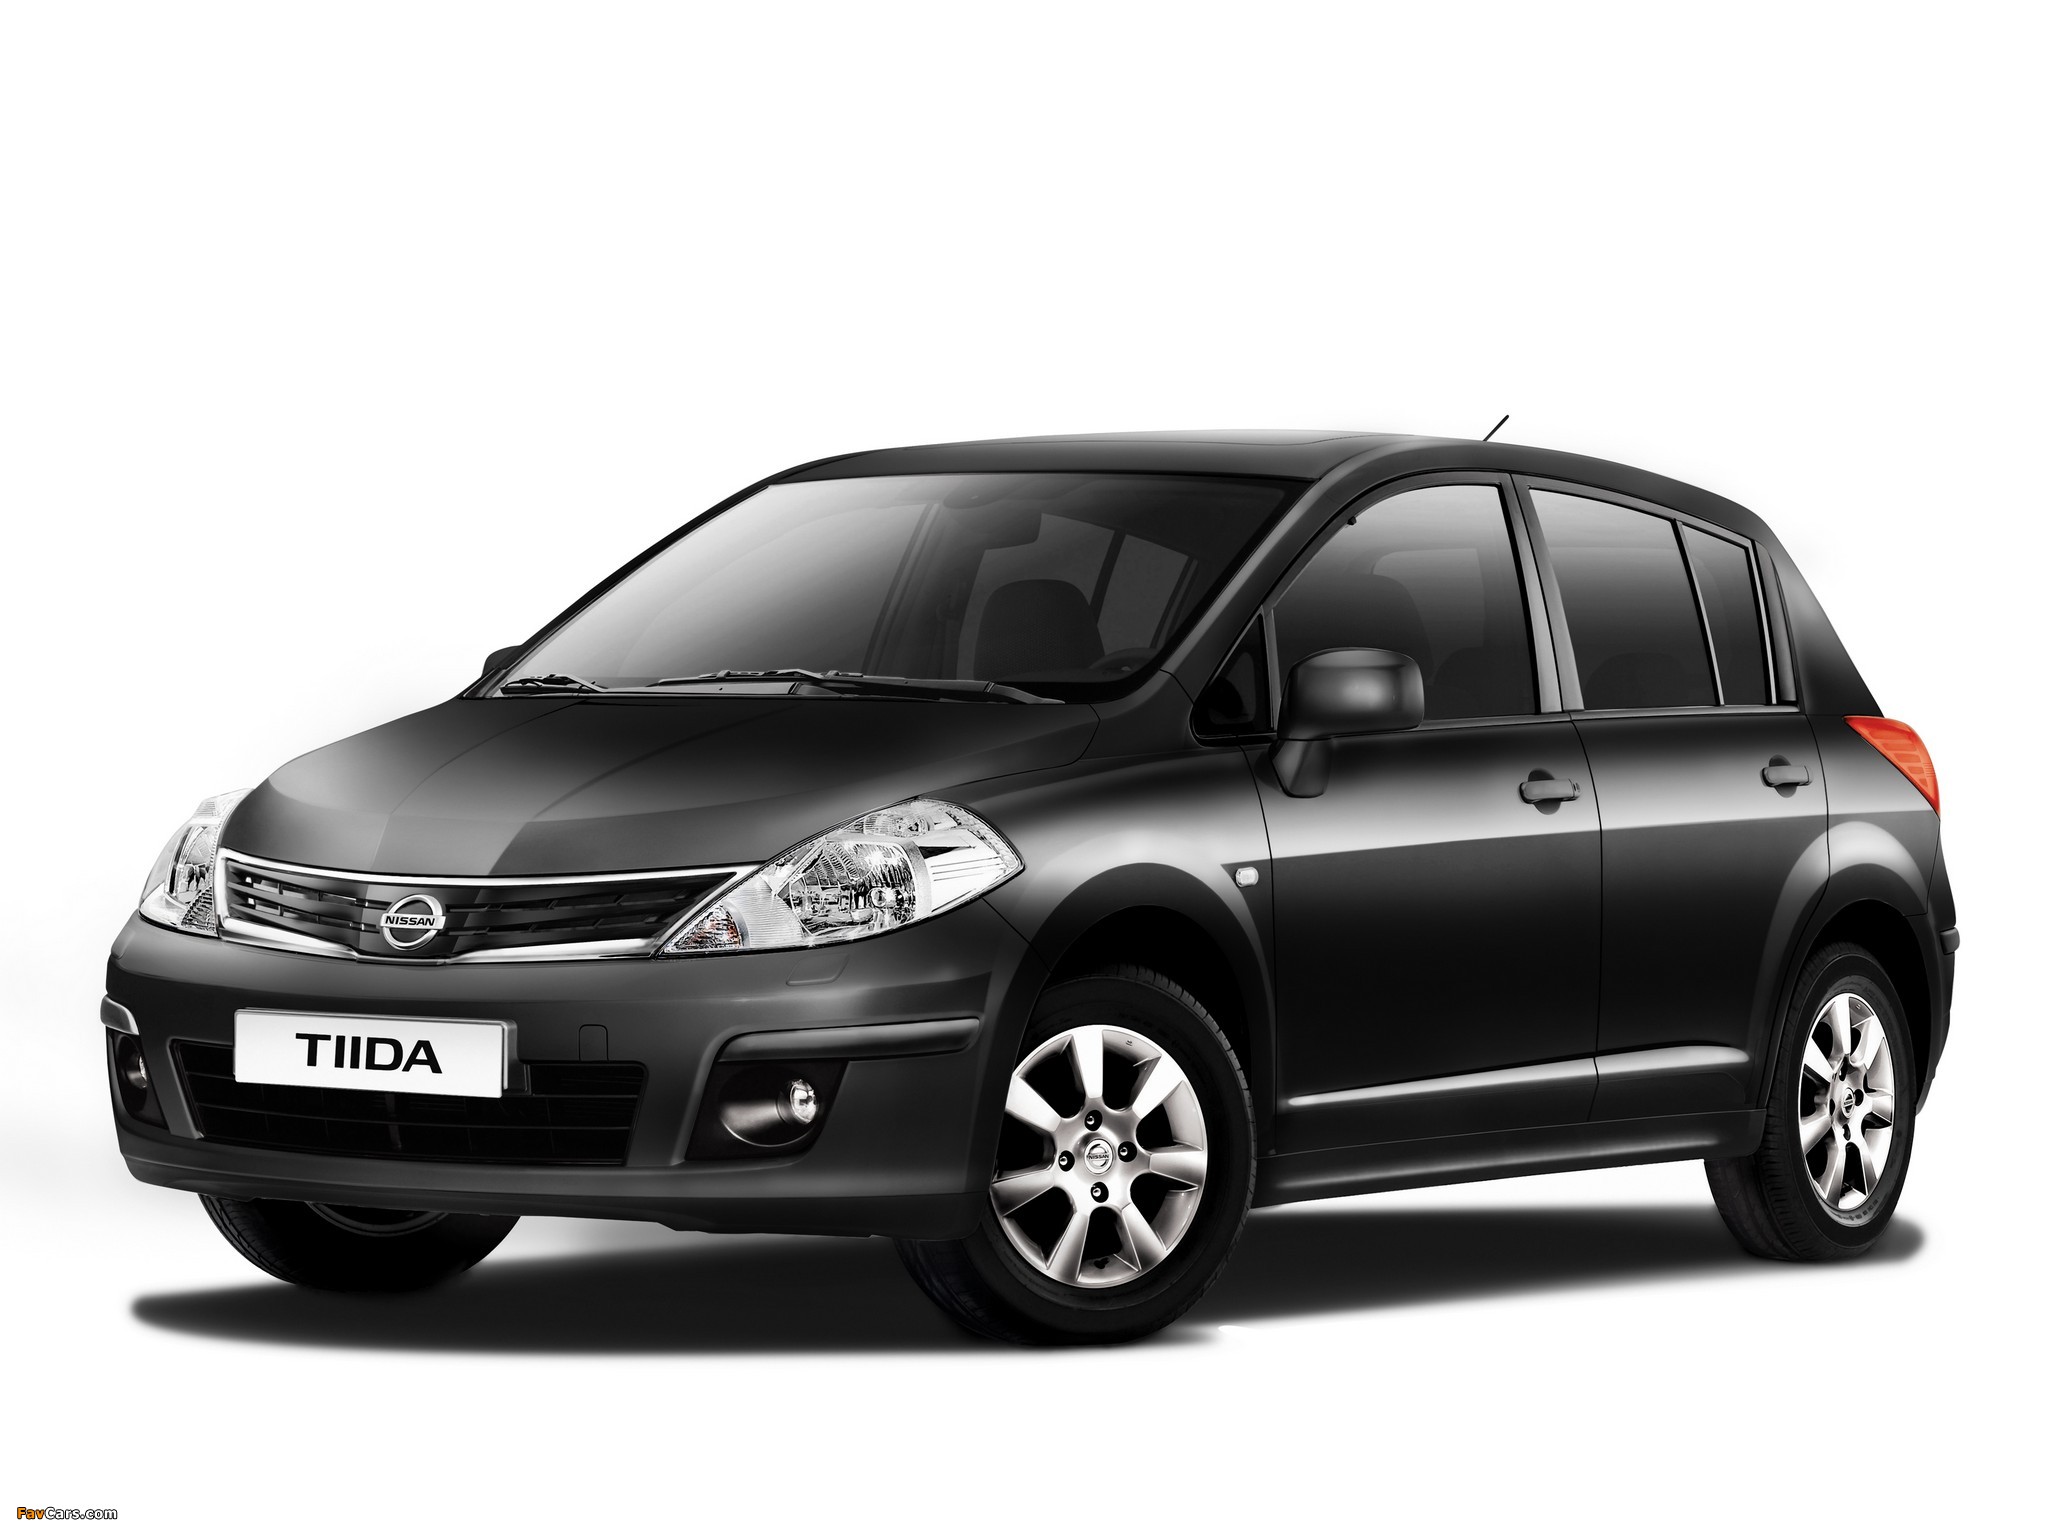 Nissan Tiida Hatchback (C11) 2010 pictures (2048 x 1536)